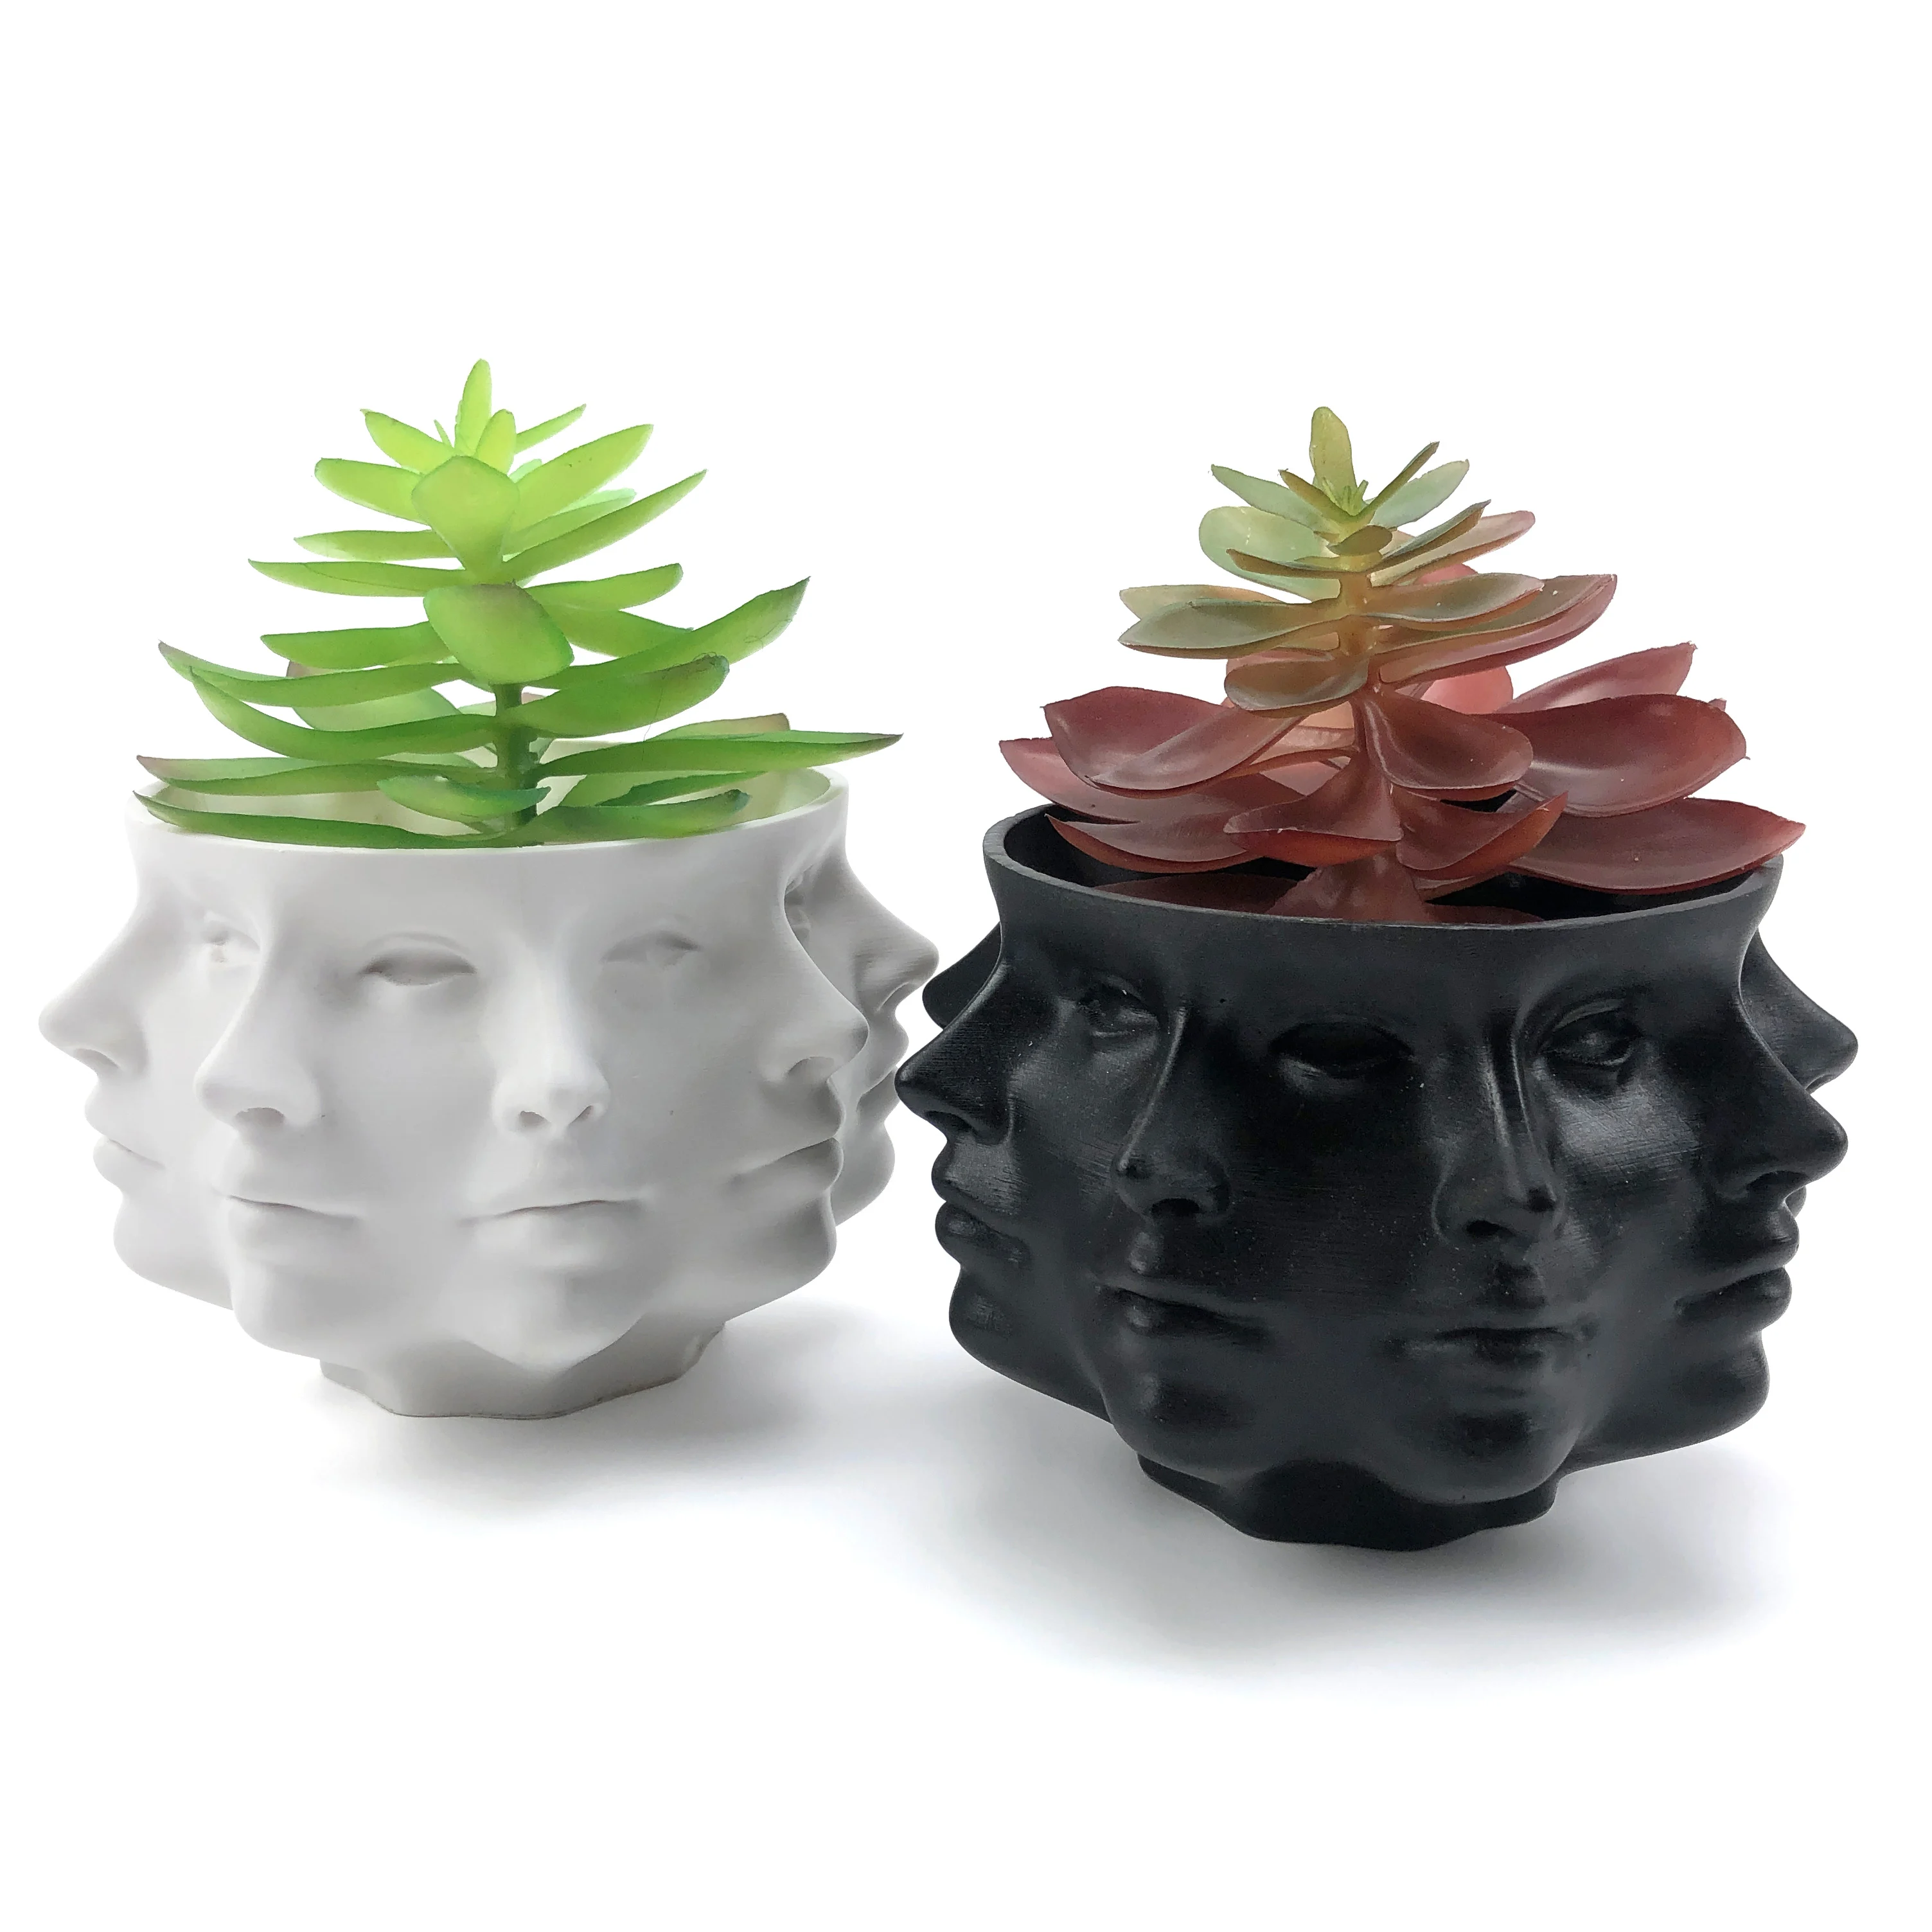 

Multi-Face Small Planter Head Face Vase Home Decoration Succulent Cactus Indoor Plant Pot